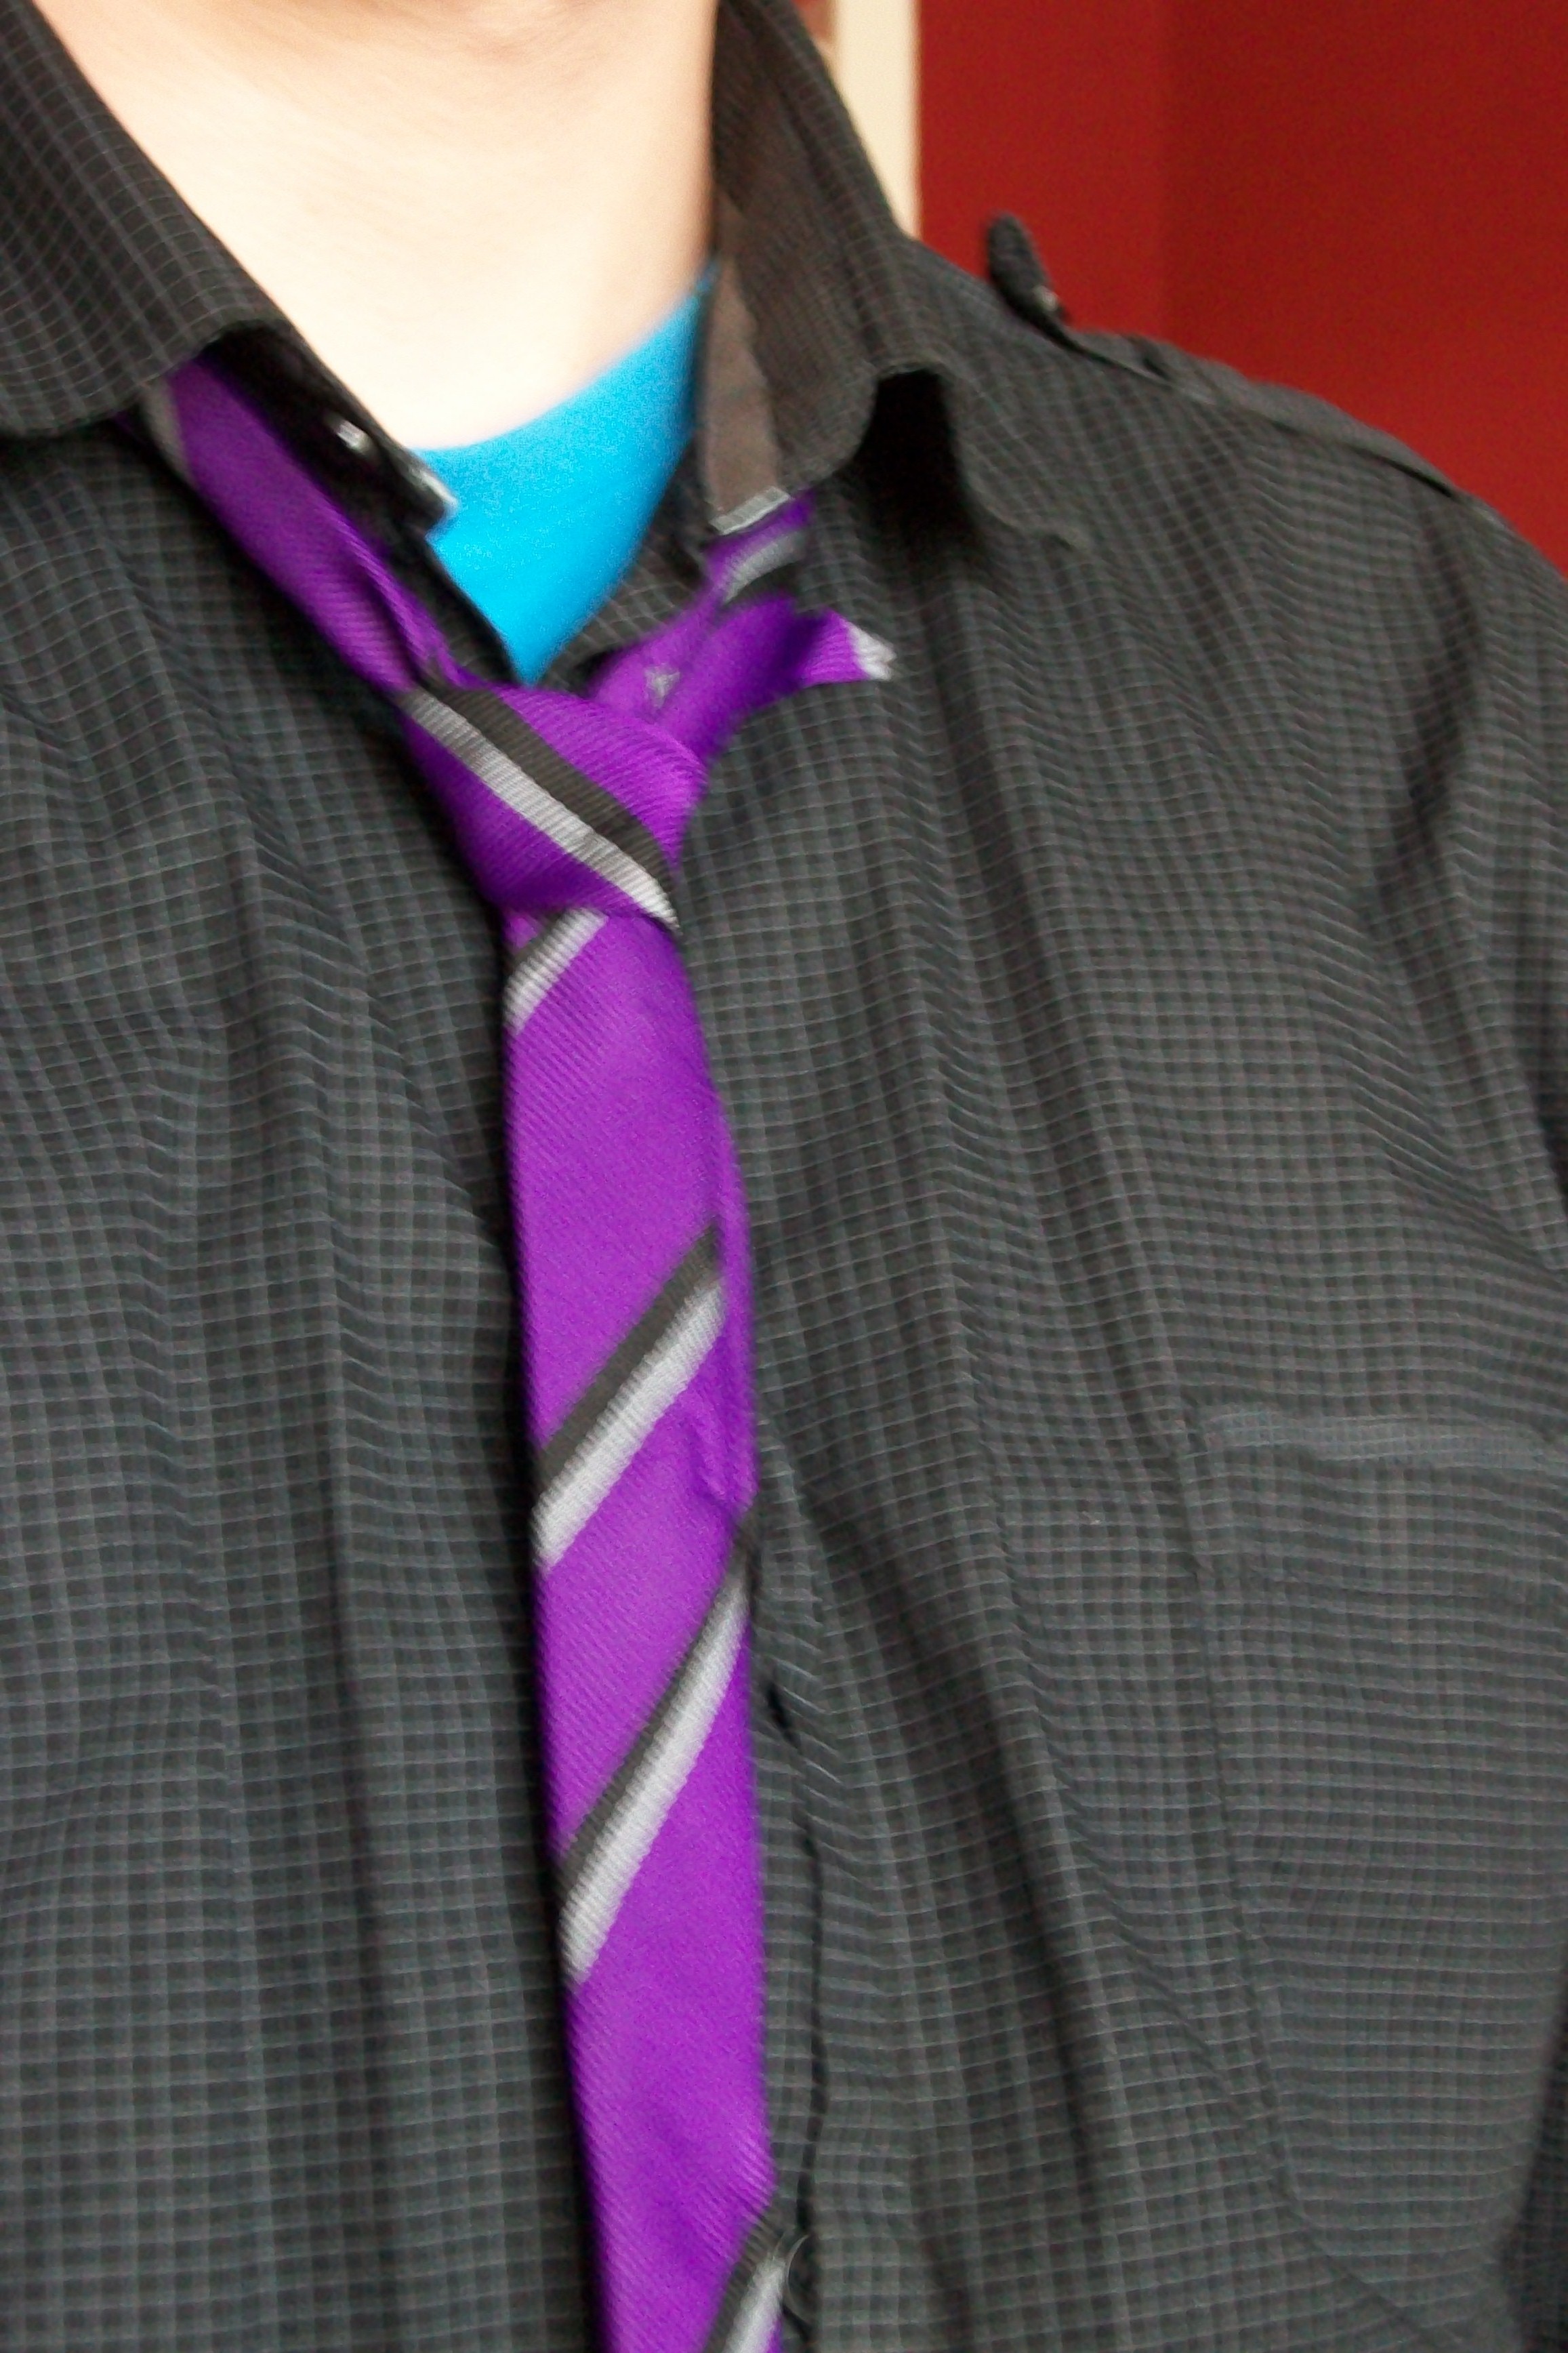 Customizing your school tie.